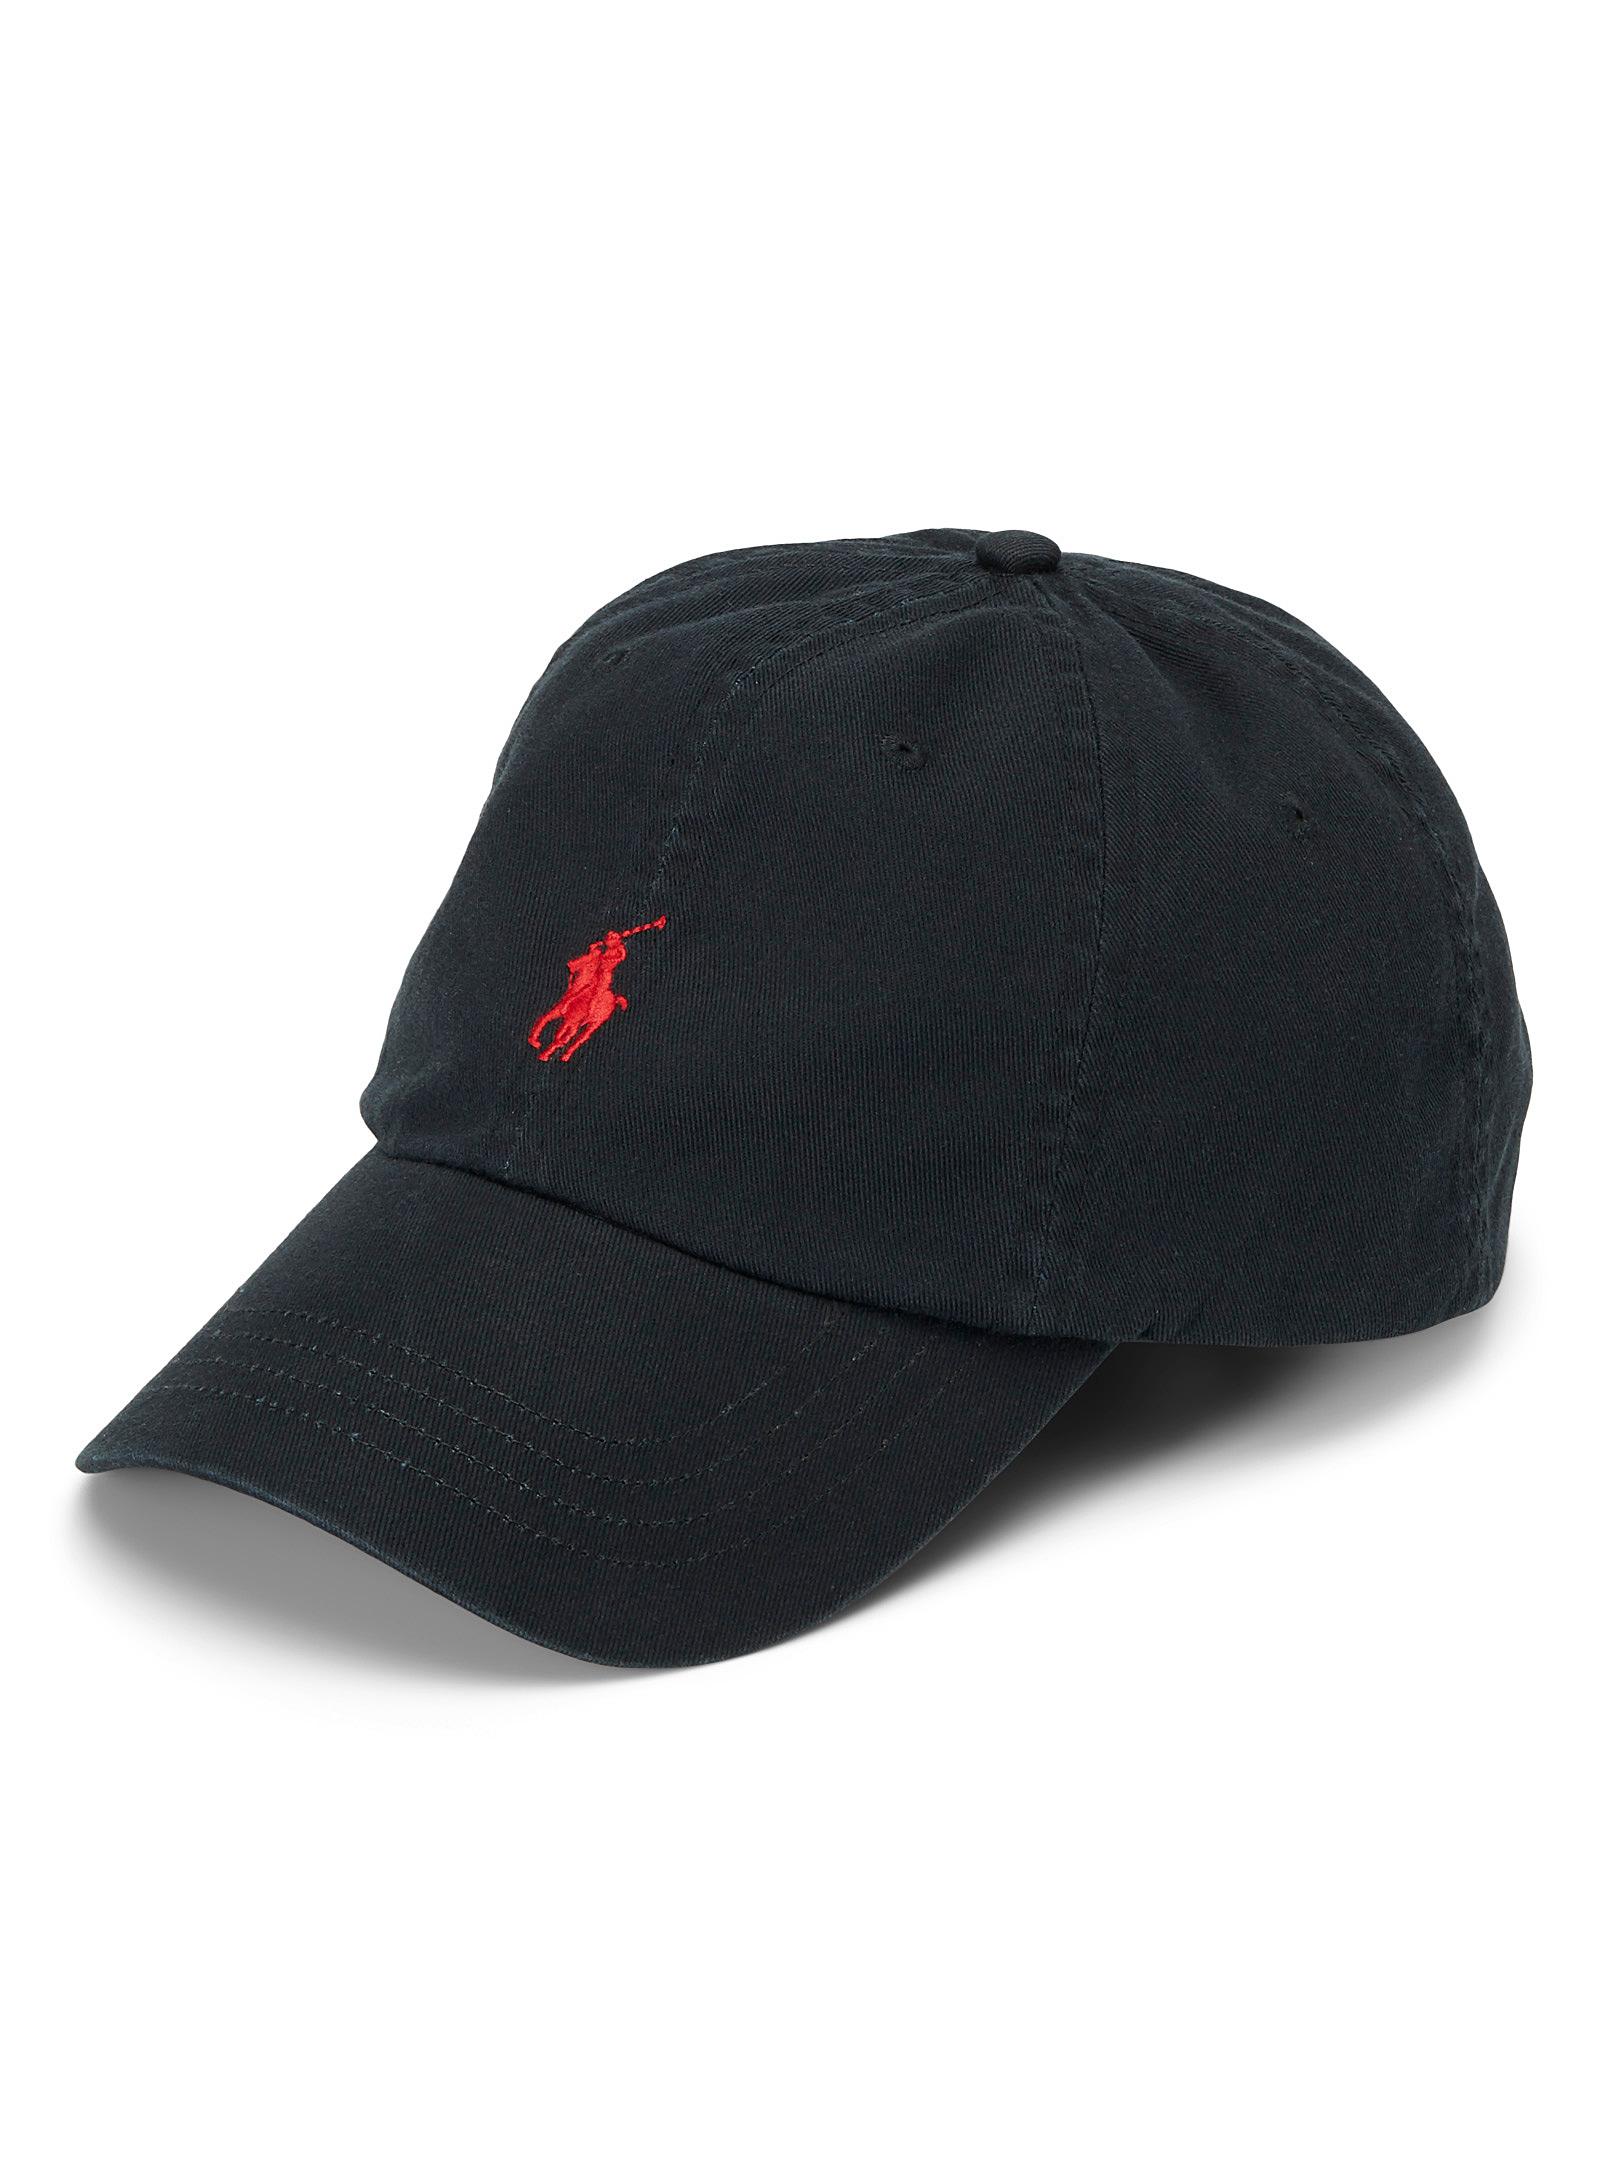 Polo Ralph Lauren Cotton Classic Sport Cap in Black Red (Black) for Men -  Save 47% - Lyst